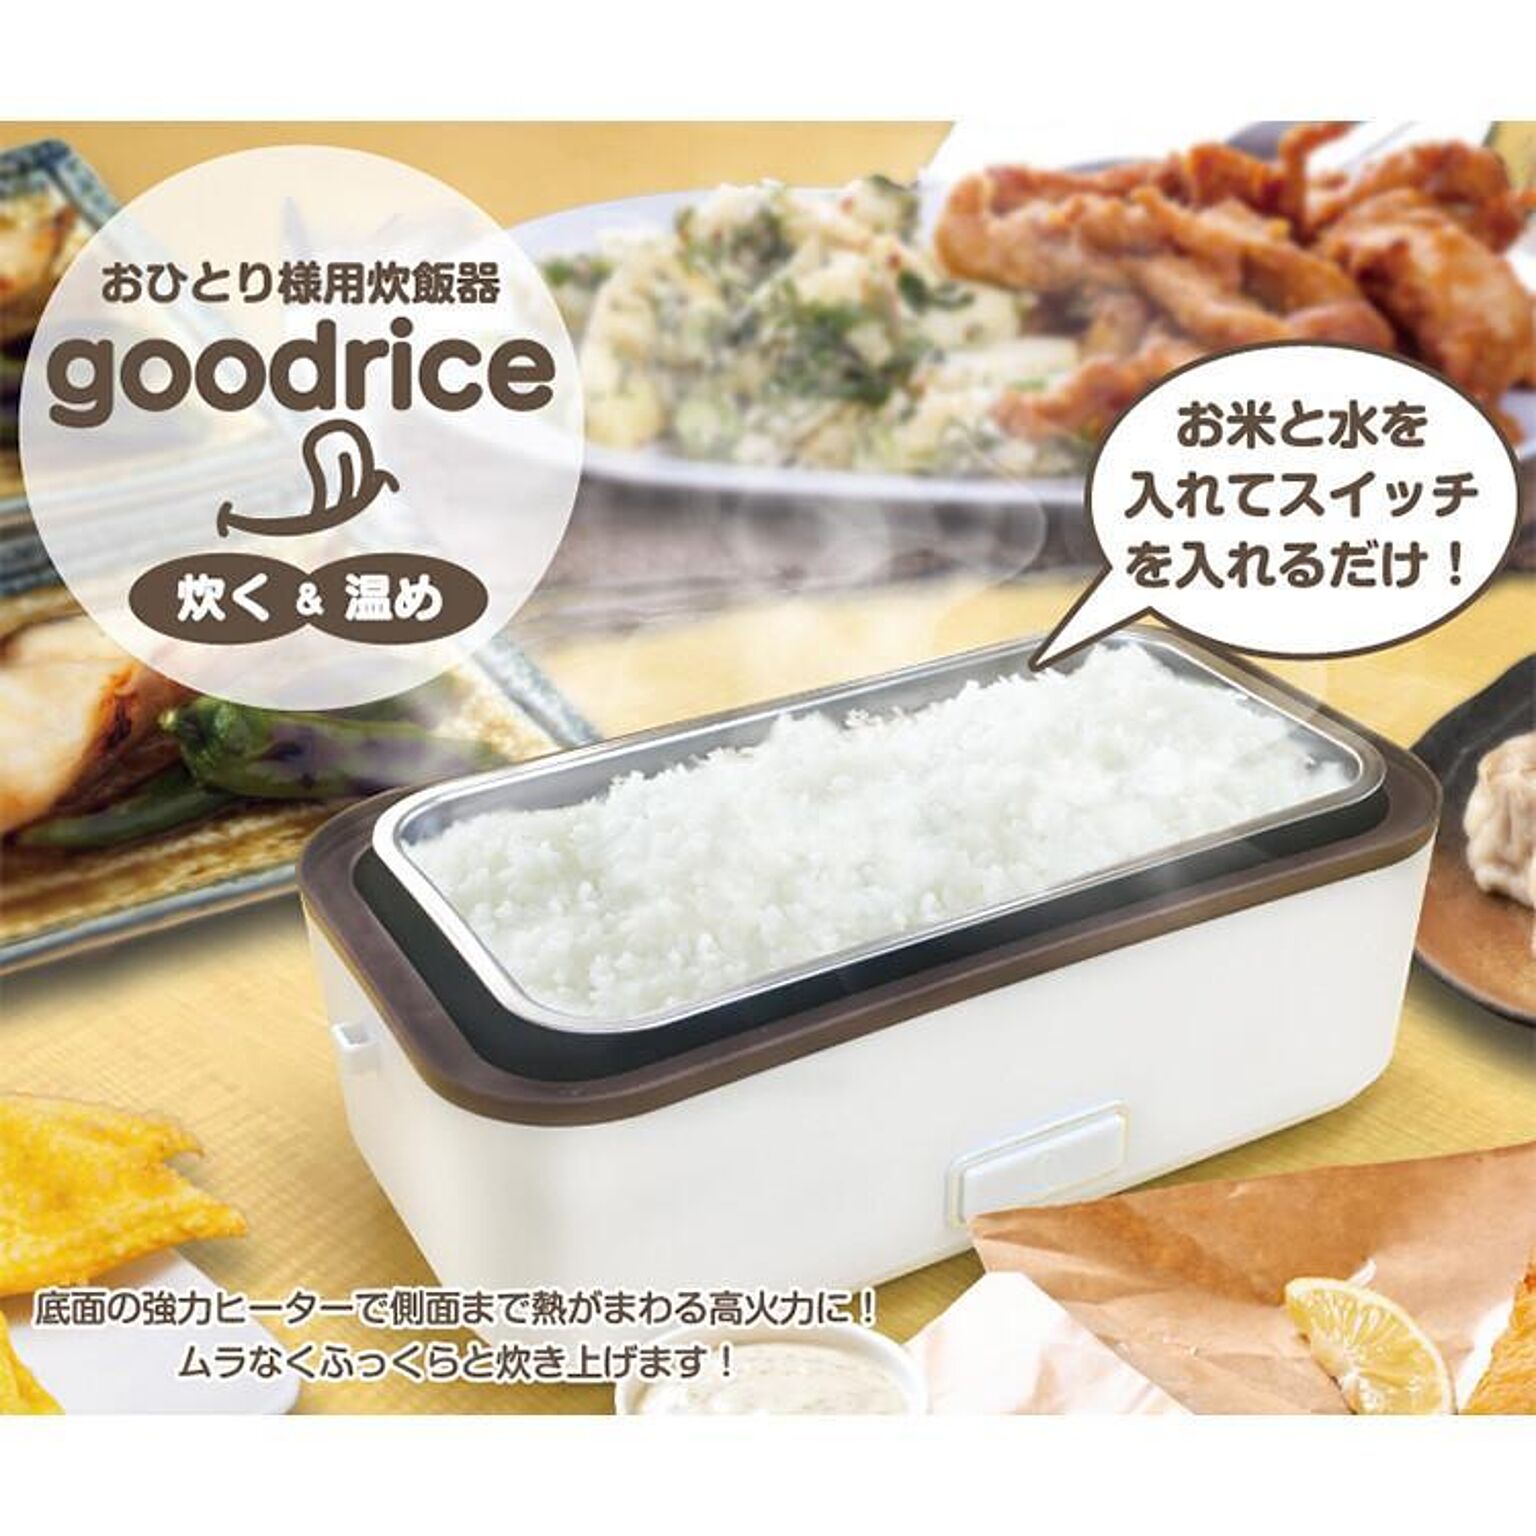 【EN】/HR-T05 おひとり様用炊飯器 goodrice